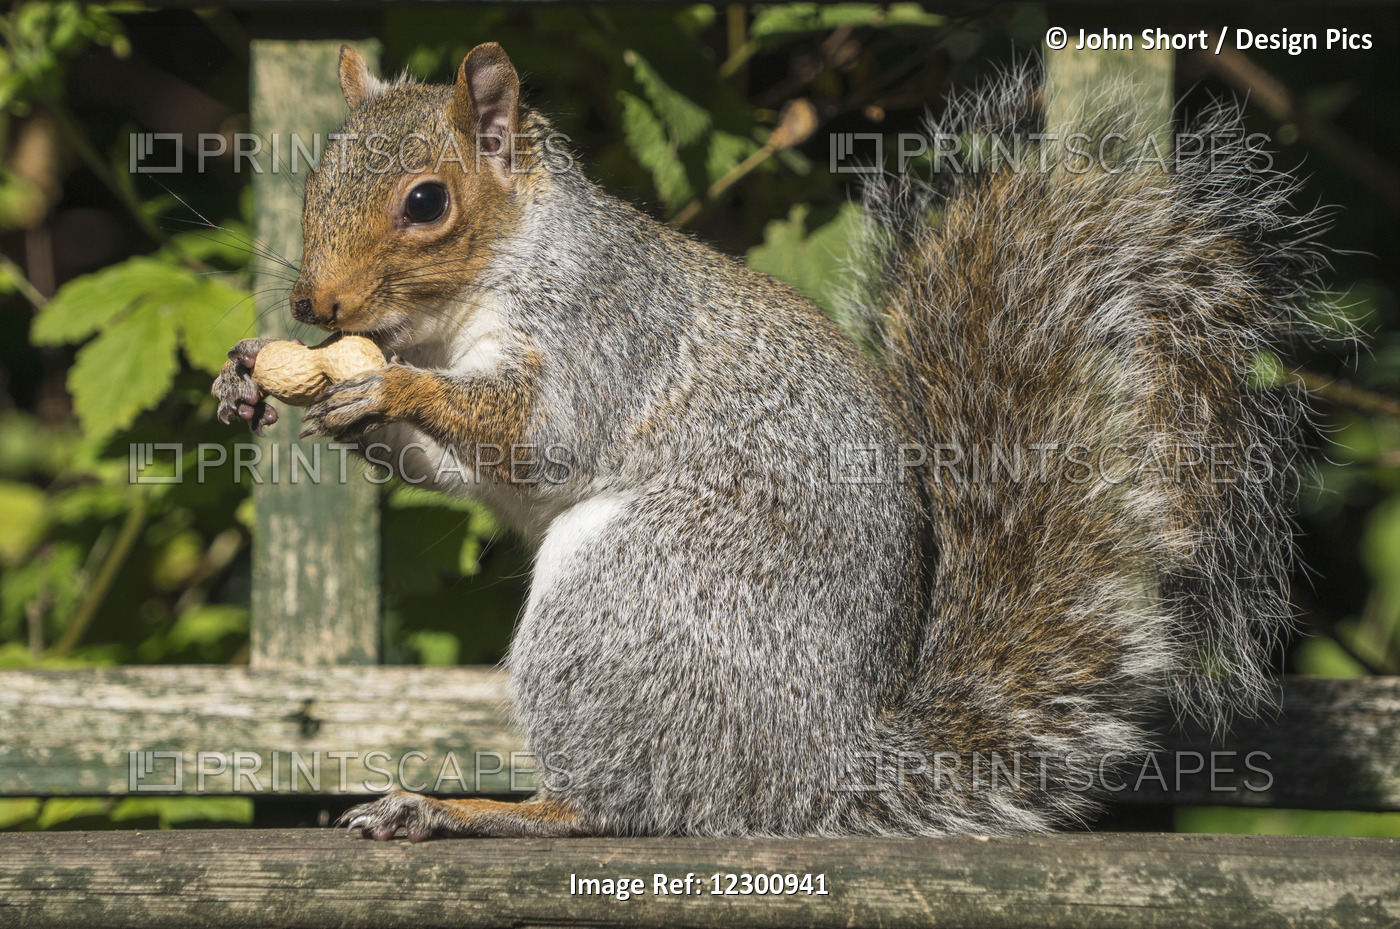 Squirrel Holding A Shelled Peanut; Gateshead, Tyne And Wear, England